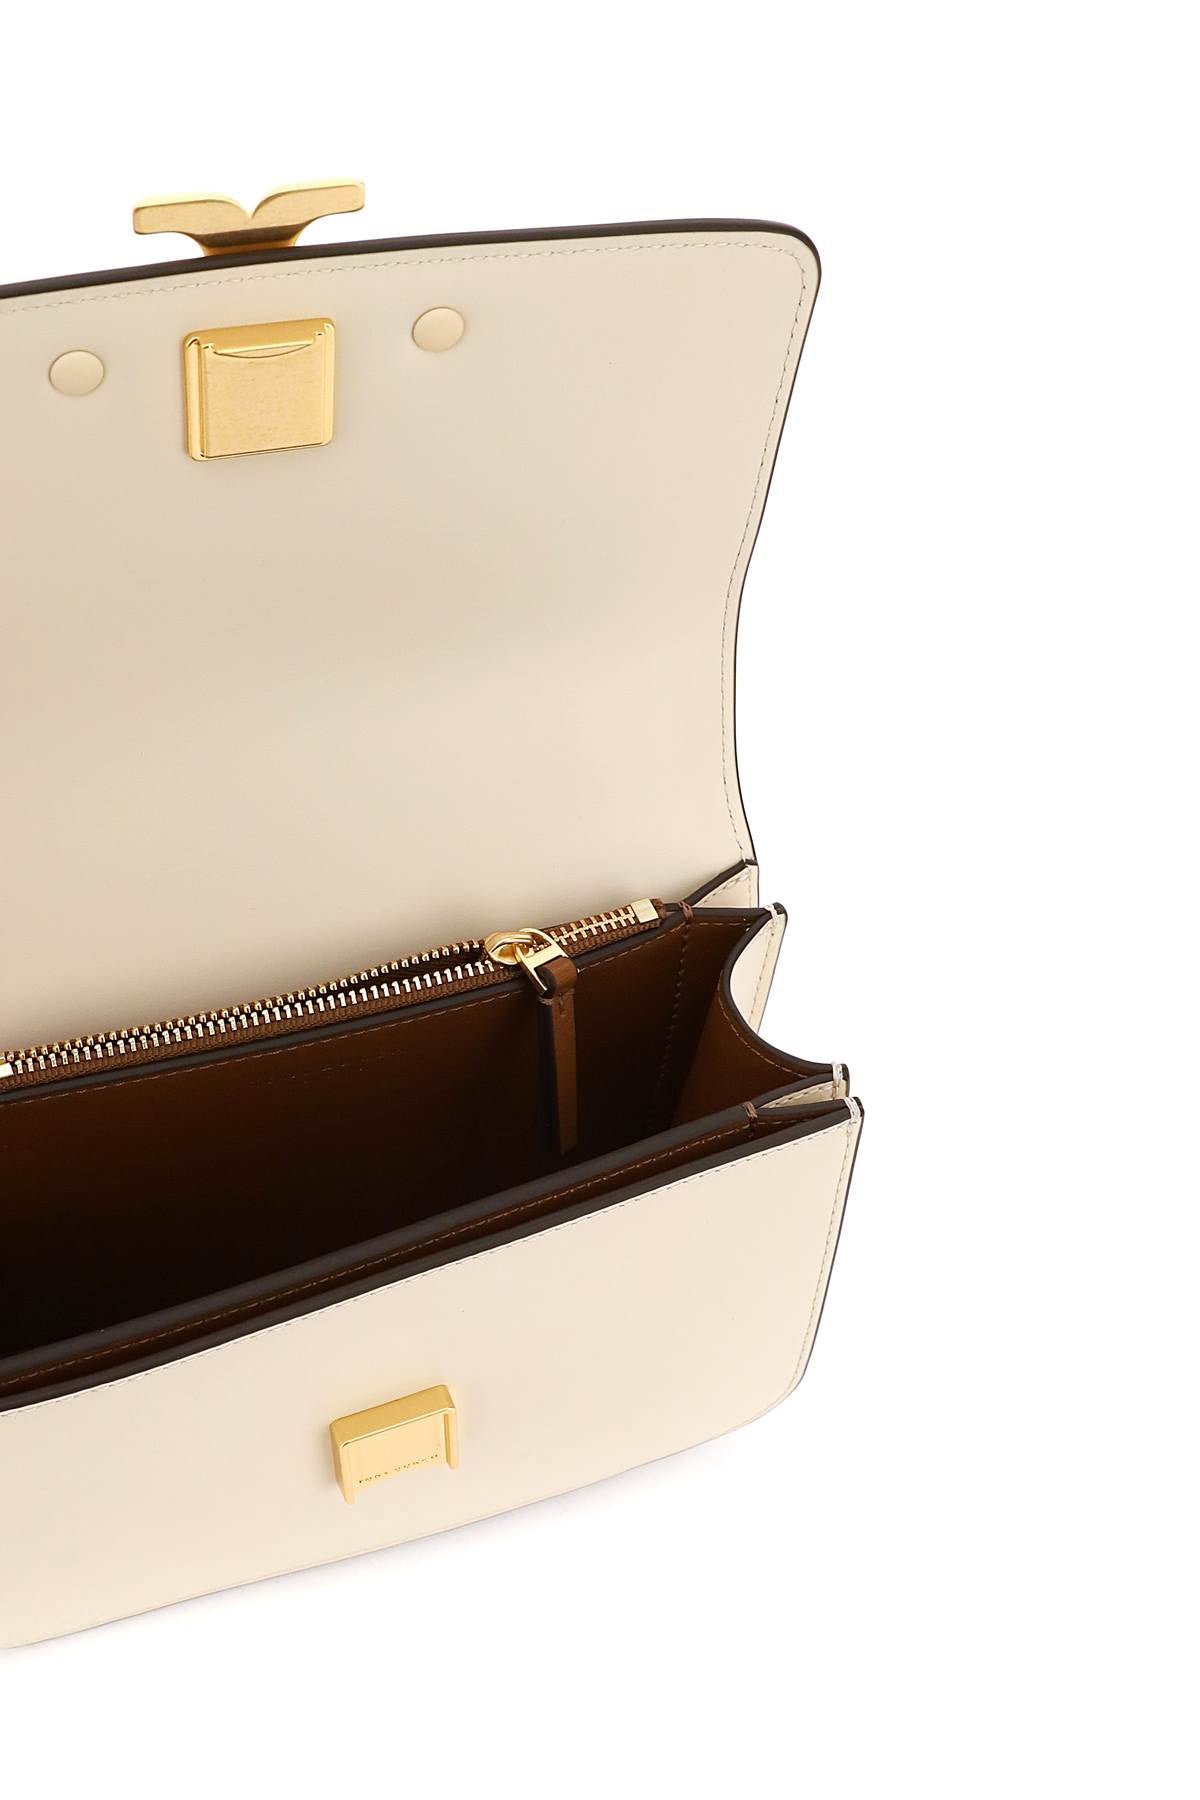 TORY BURCH ELEANOR SMALL SHOULDER Handbag